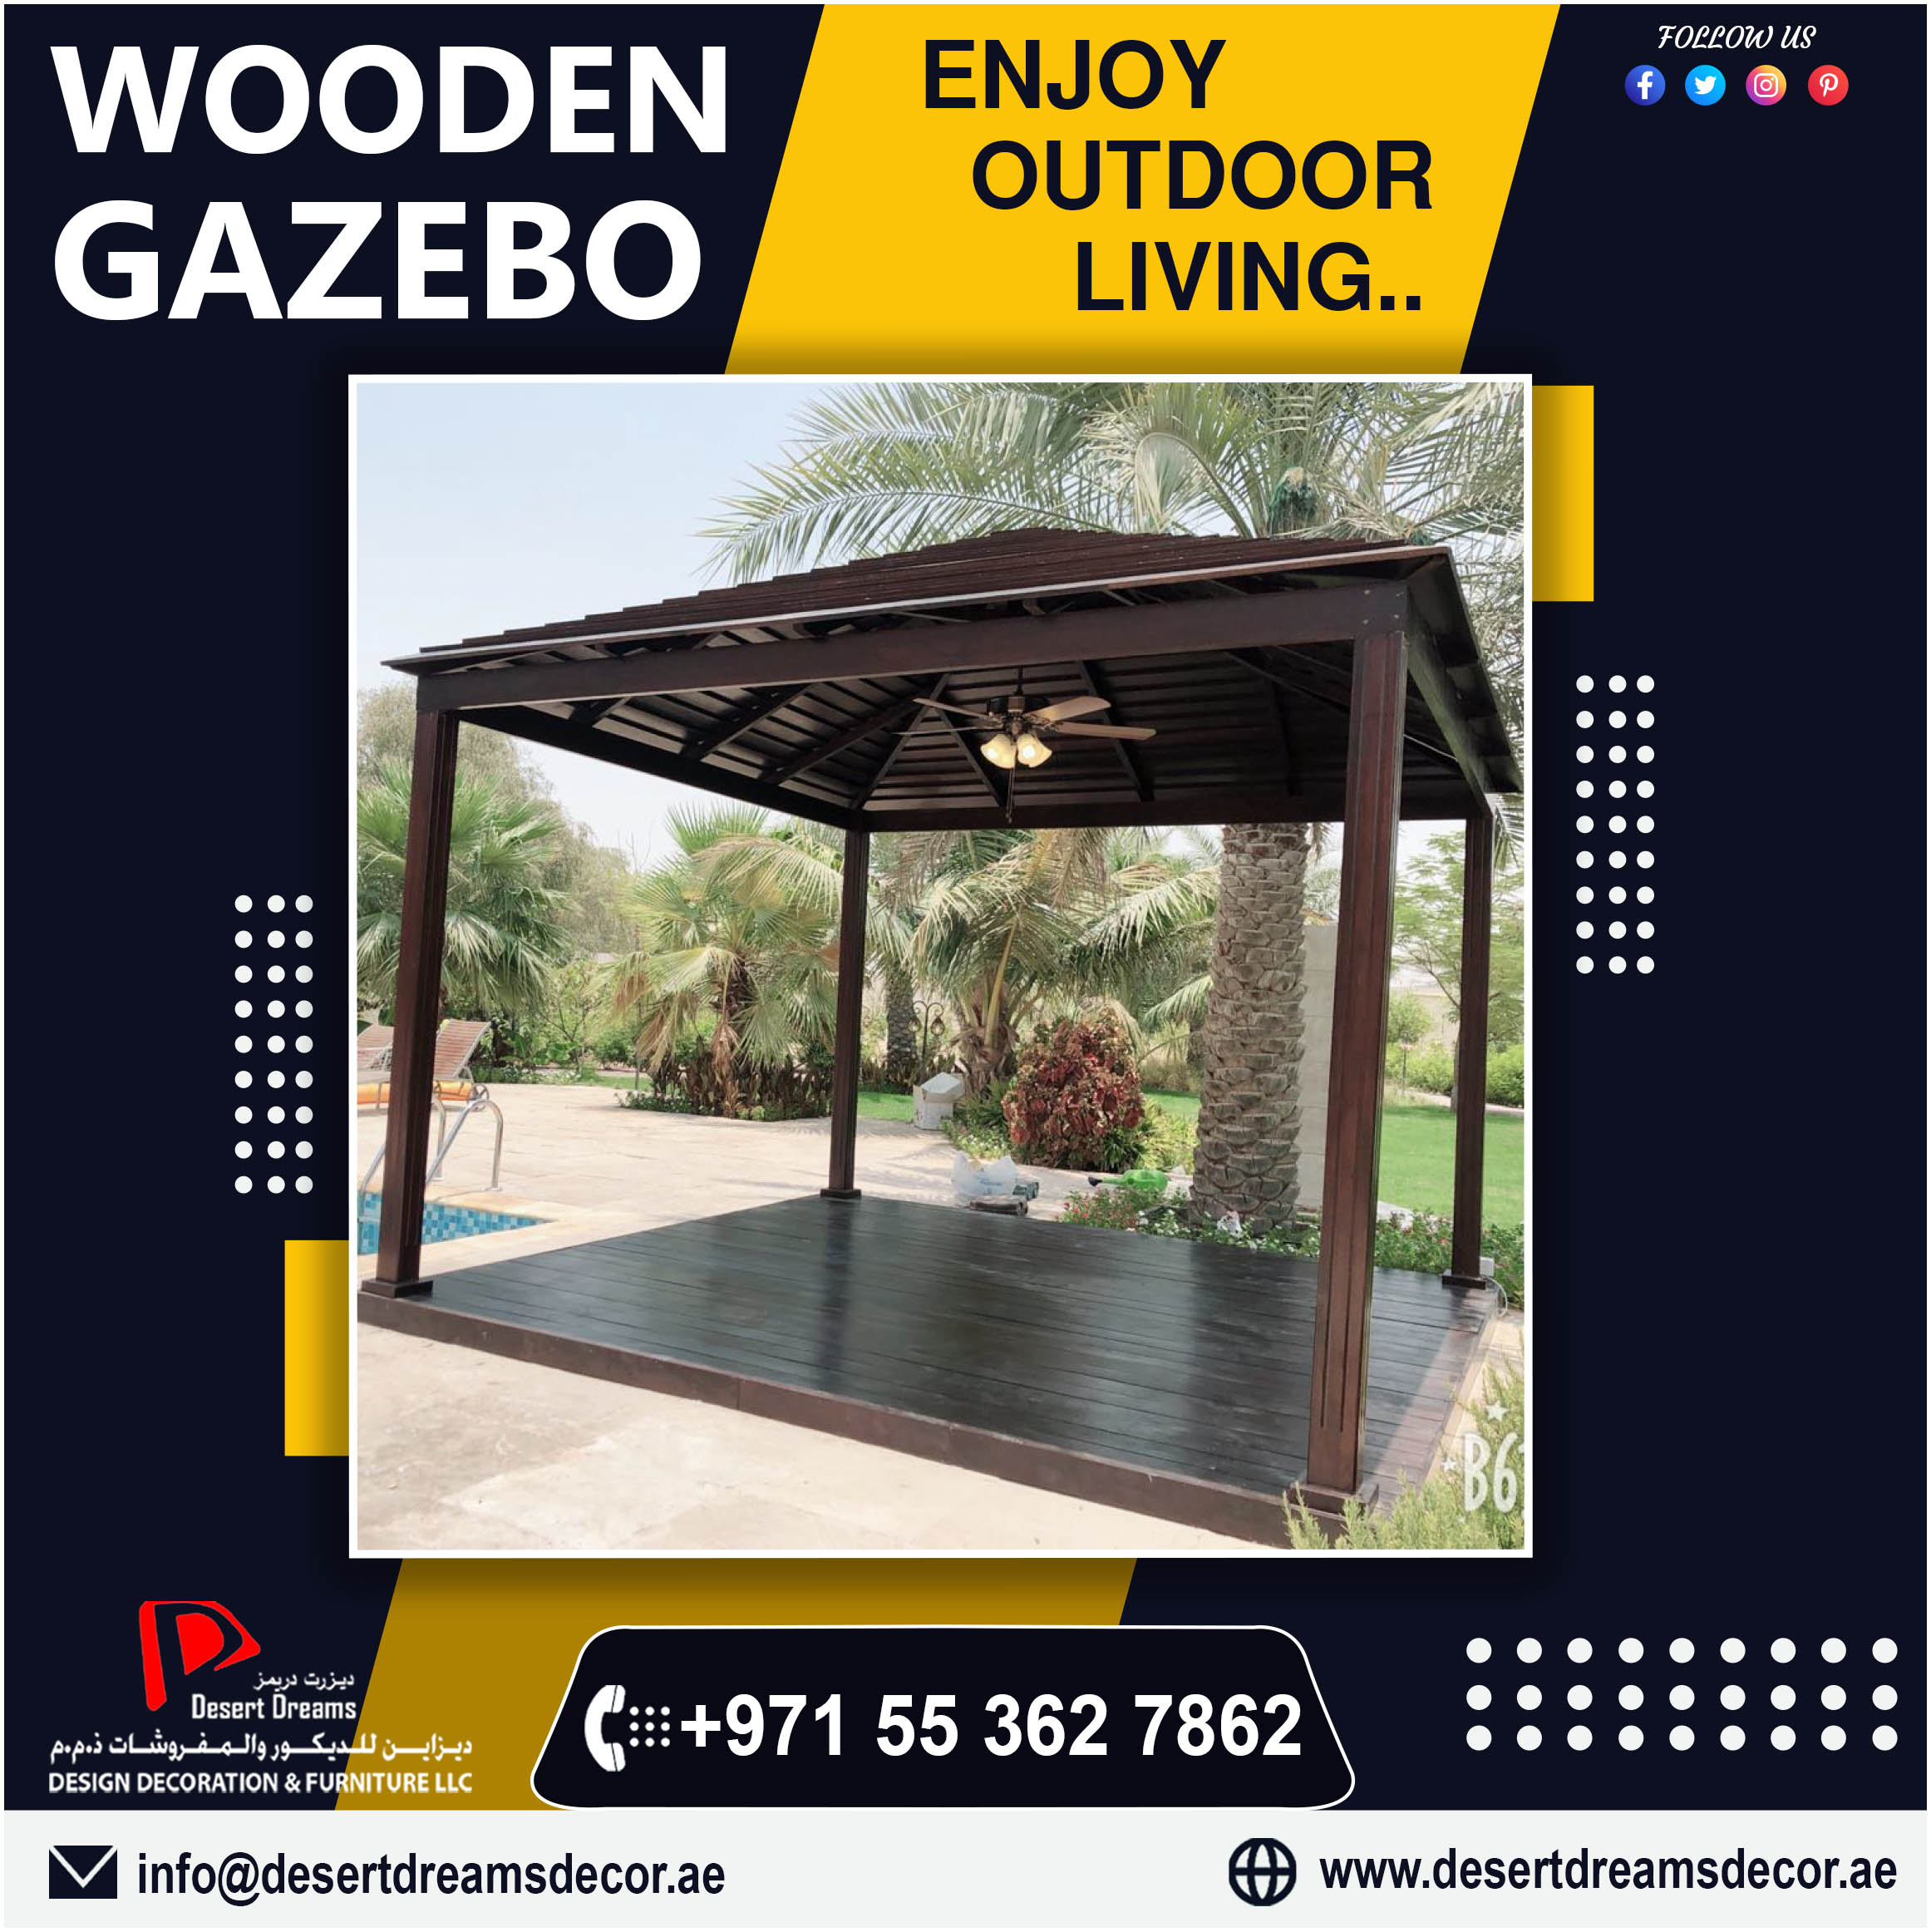 Wooden Gazebo in Uae_Wooden Gazebo Dubai_Gazebo Abu Dhabi (1).jpg